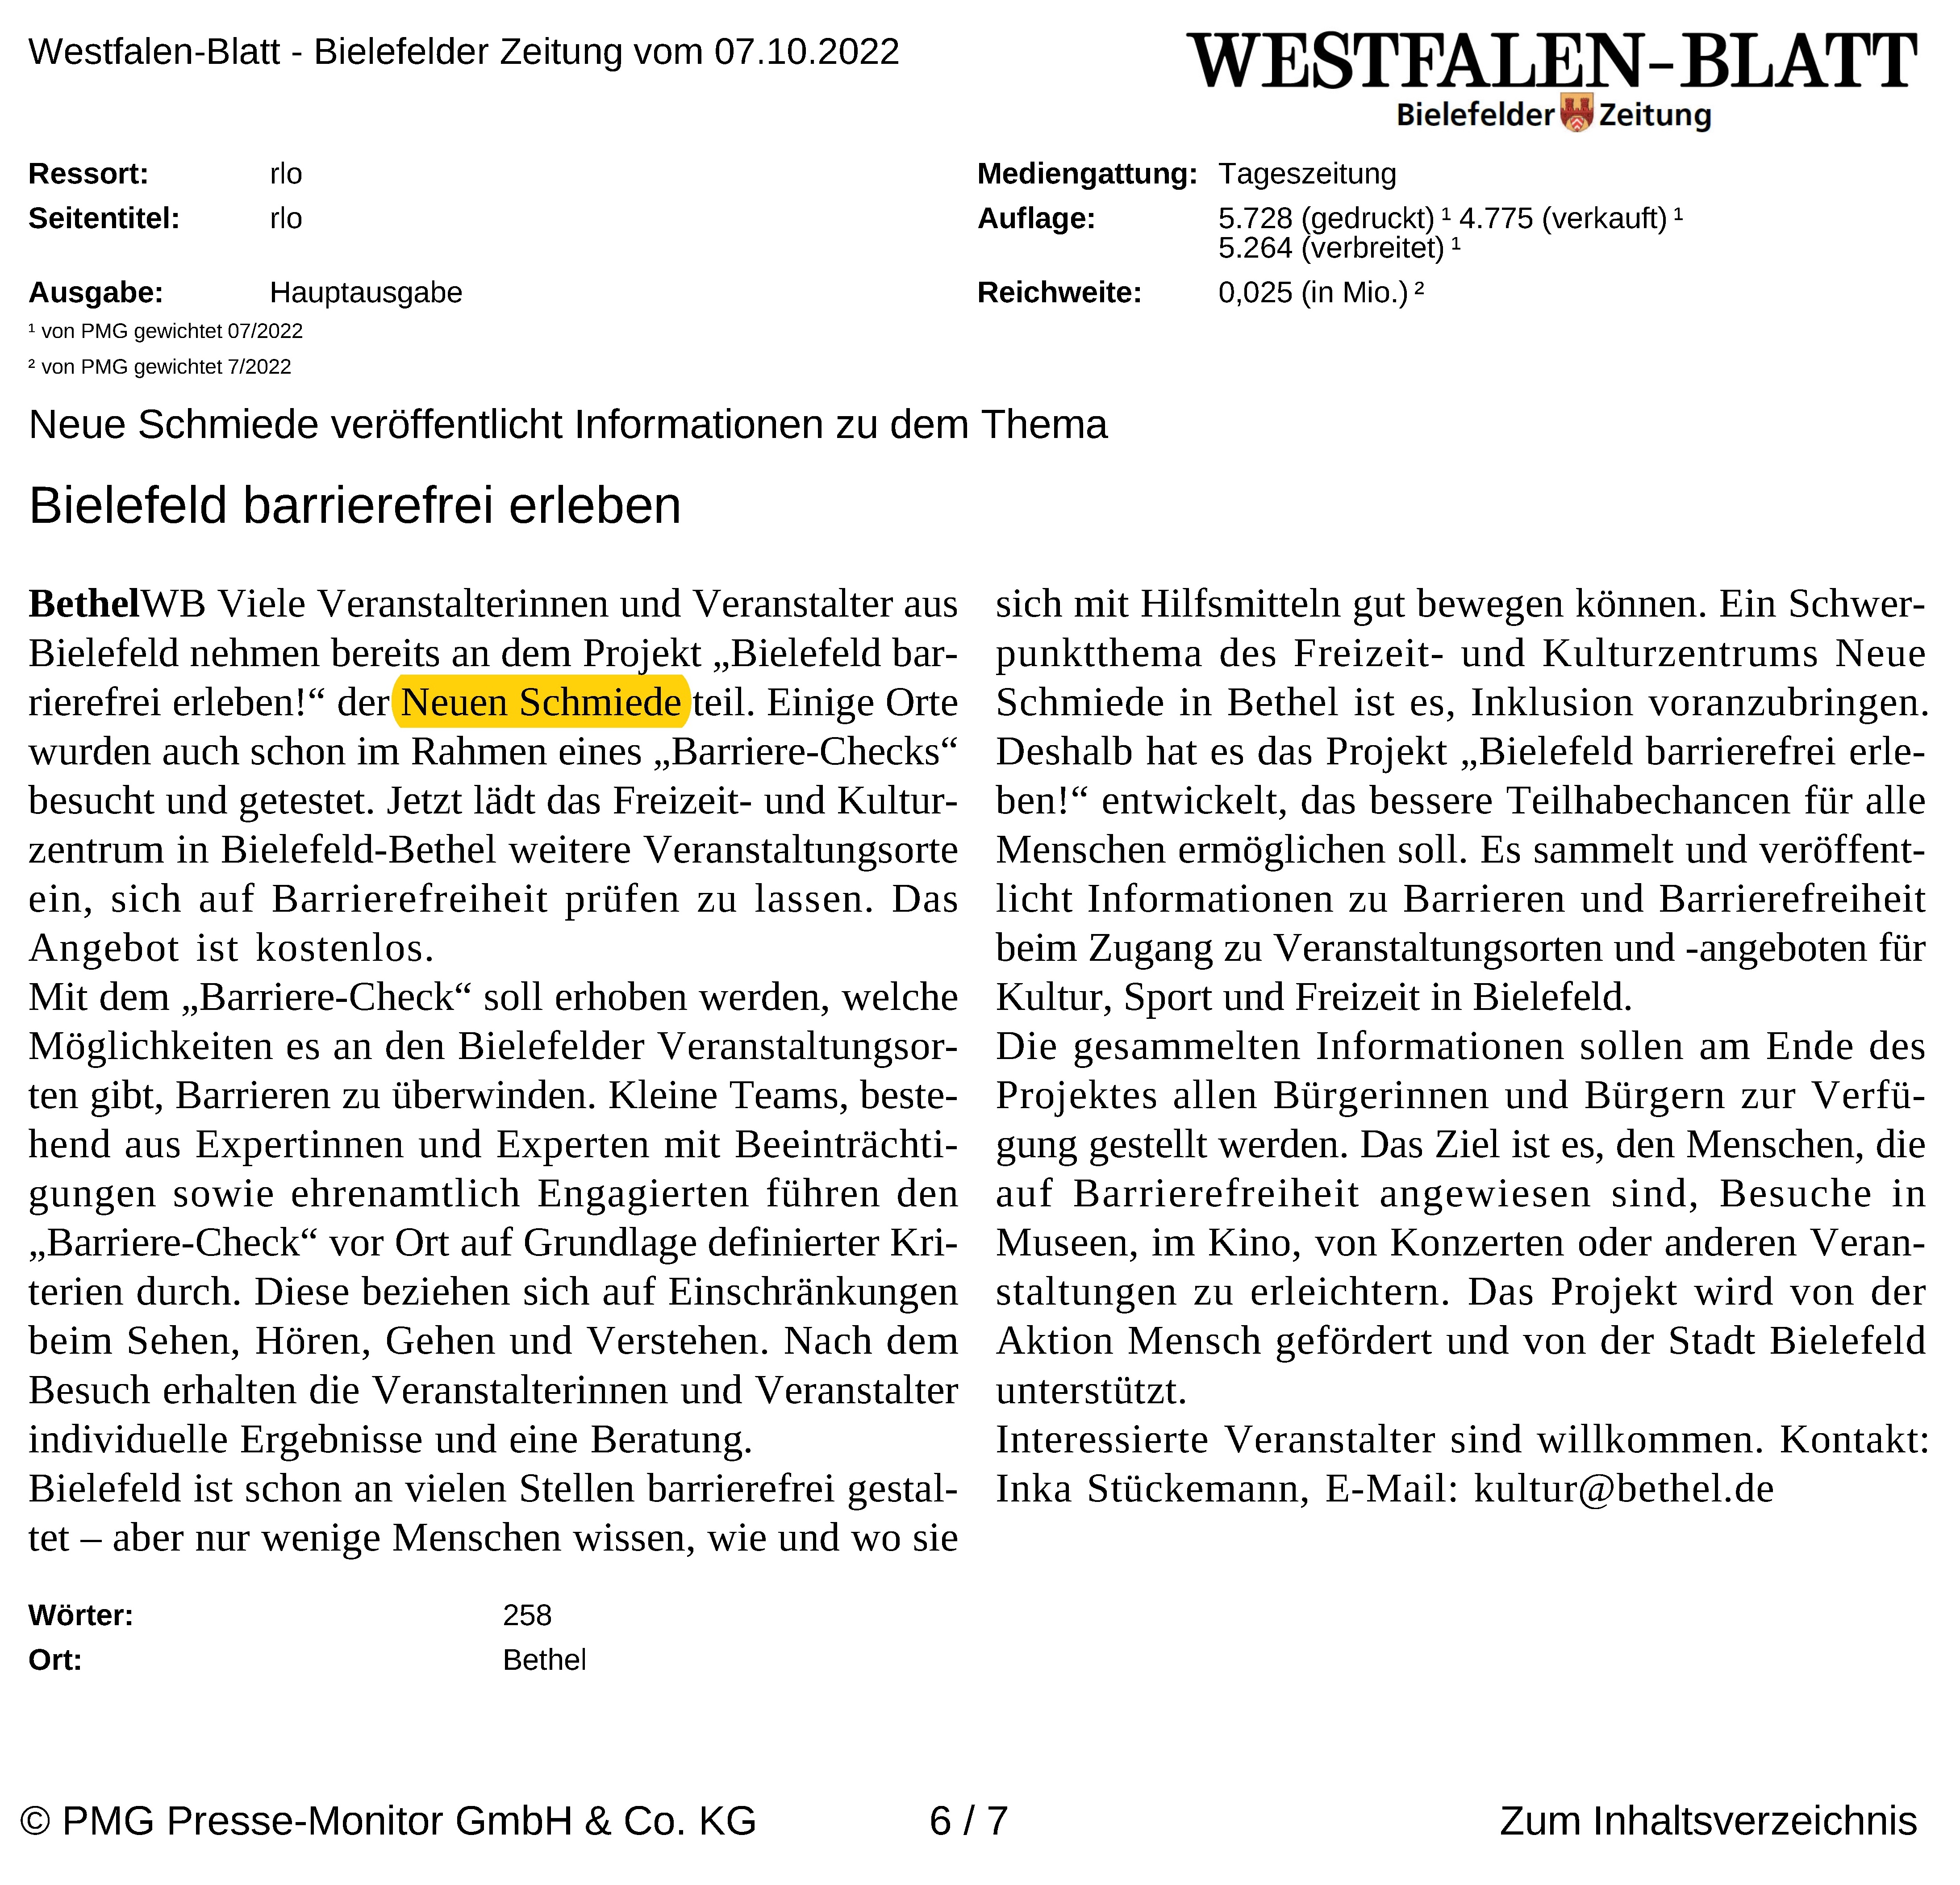 Pressebericht im Westfalen-Blatt, Oktober 2022